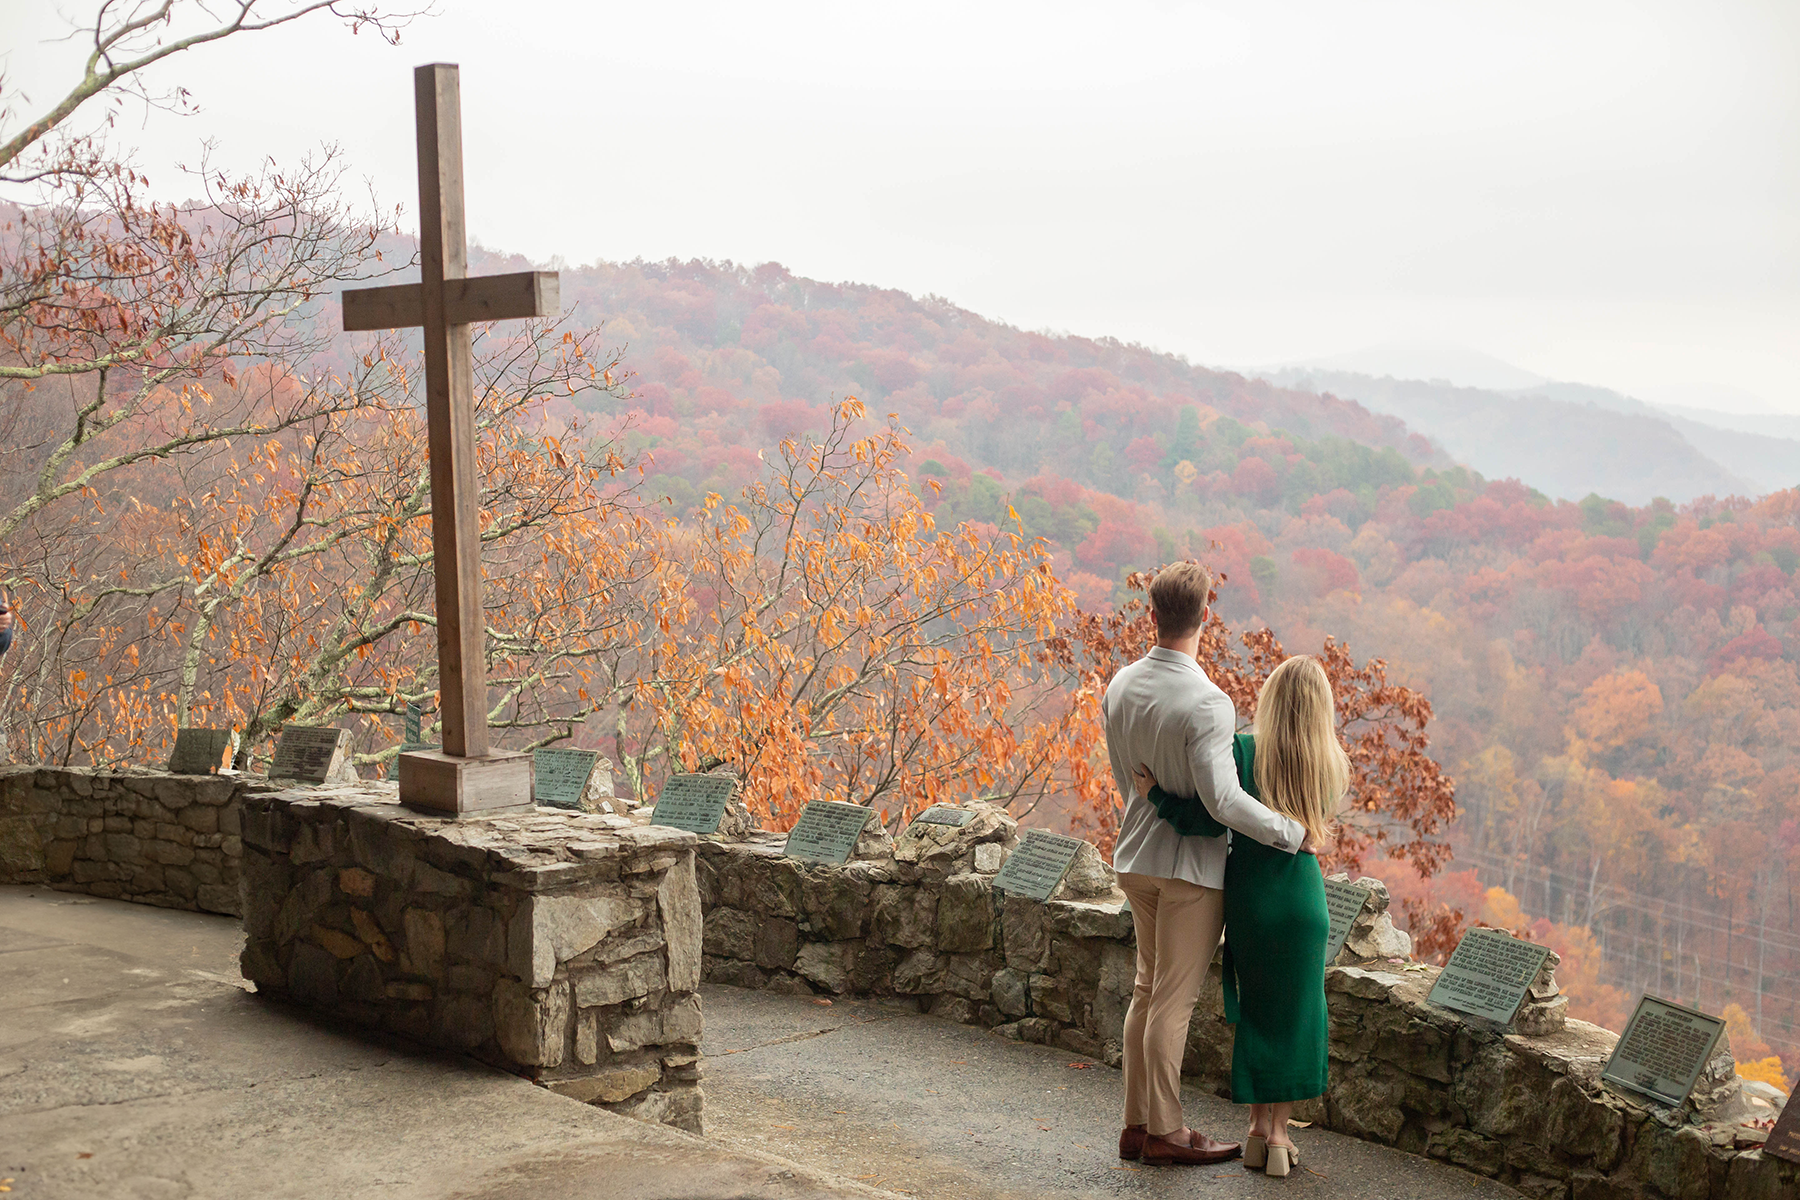 Engagement photos at Pretty Place Chapel | Christine Scott Photography